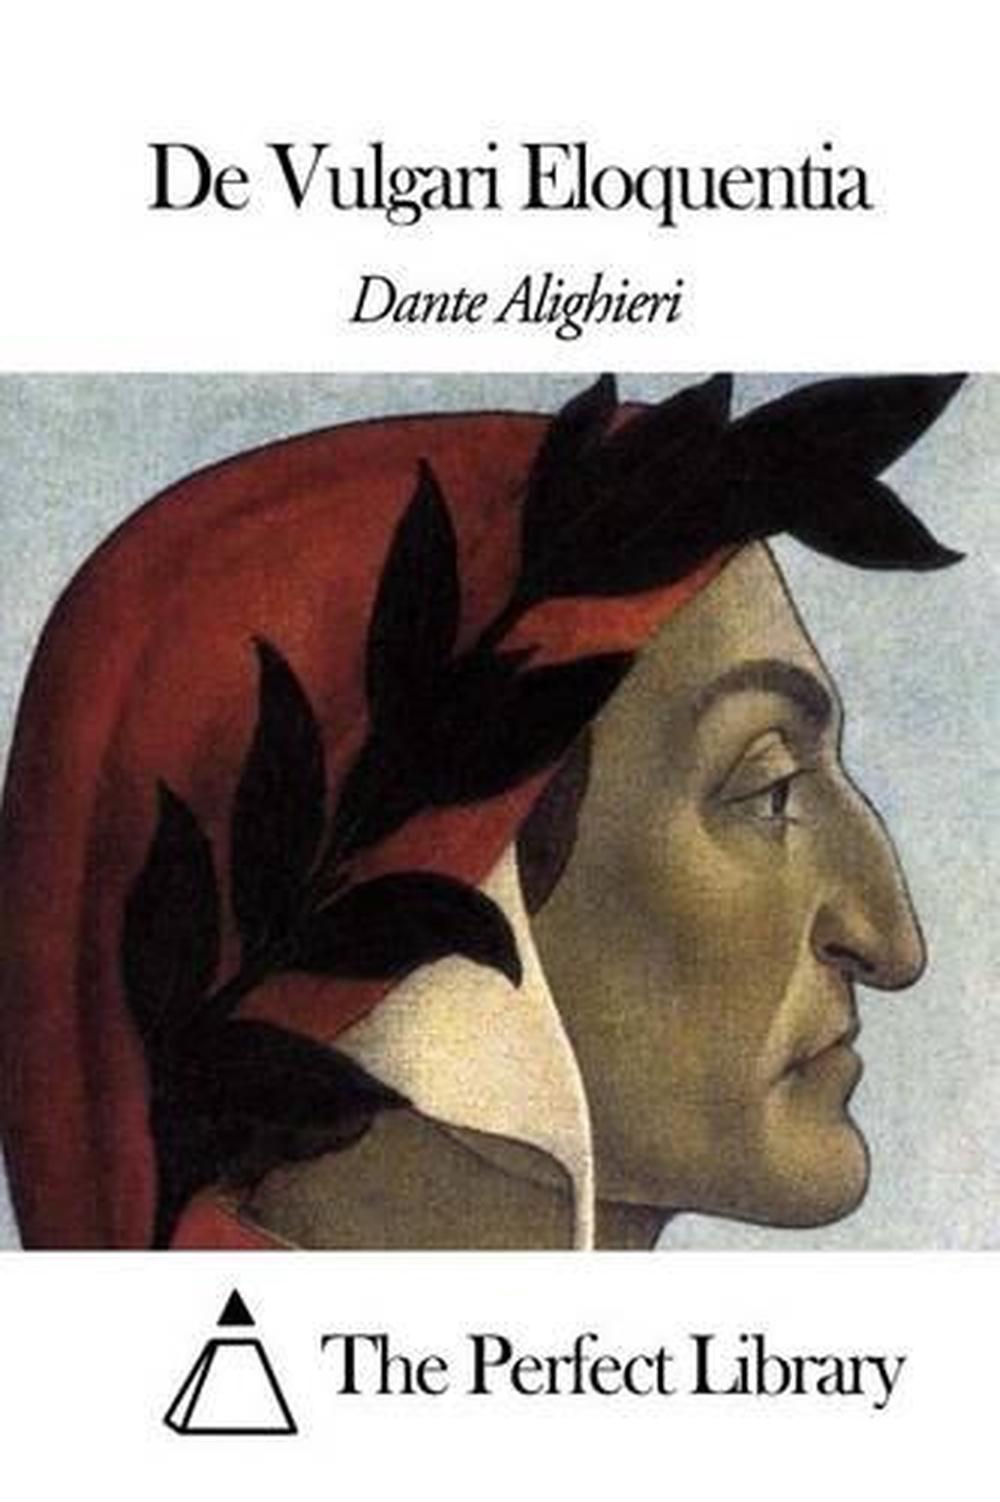 de Vulgari Eloquentia by Dante Alighieri (Latin) Paperback Book Free Shipping! 9781502885364 eBay